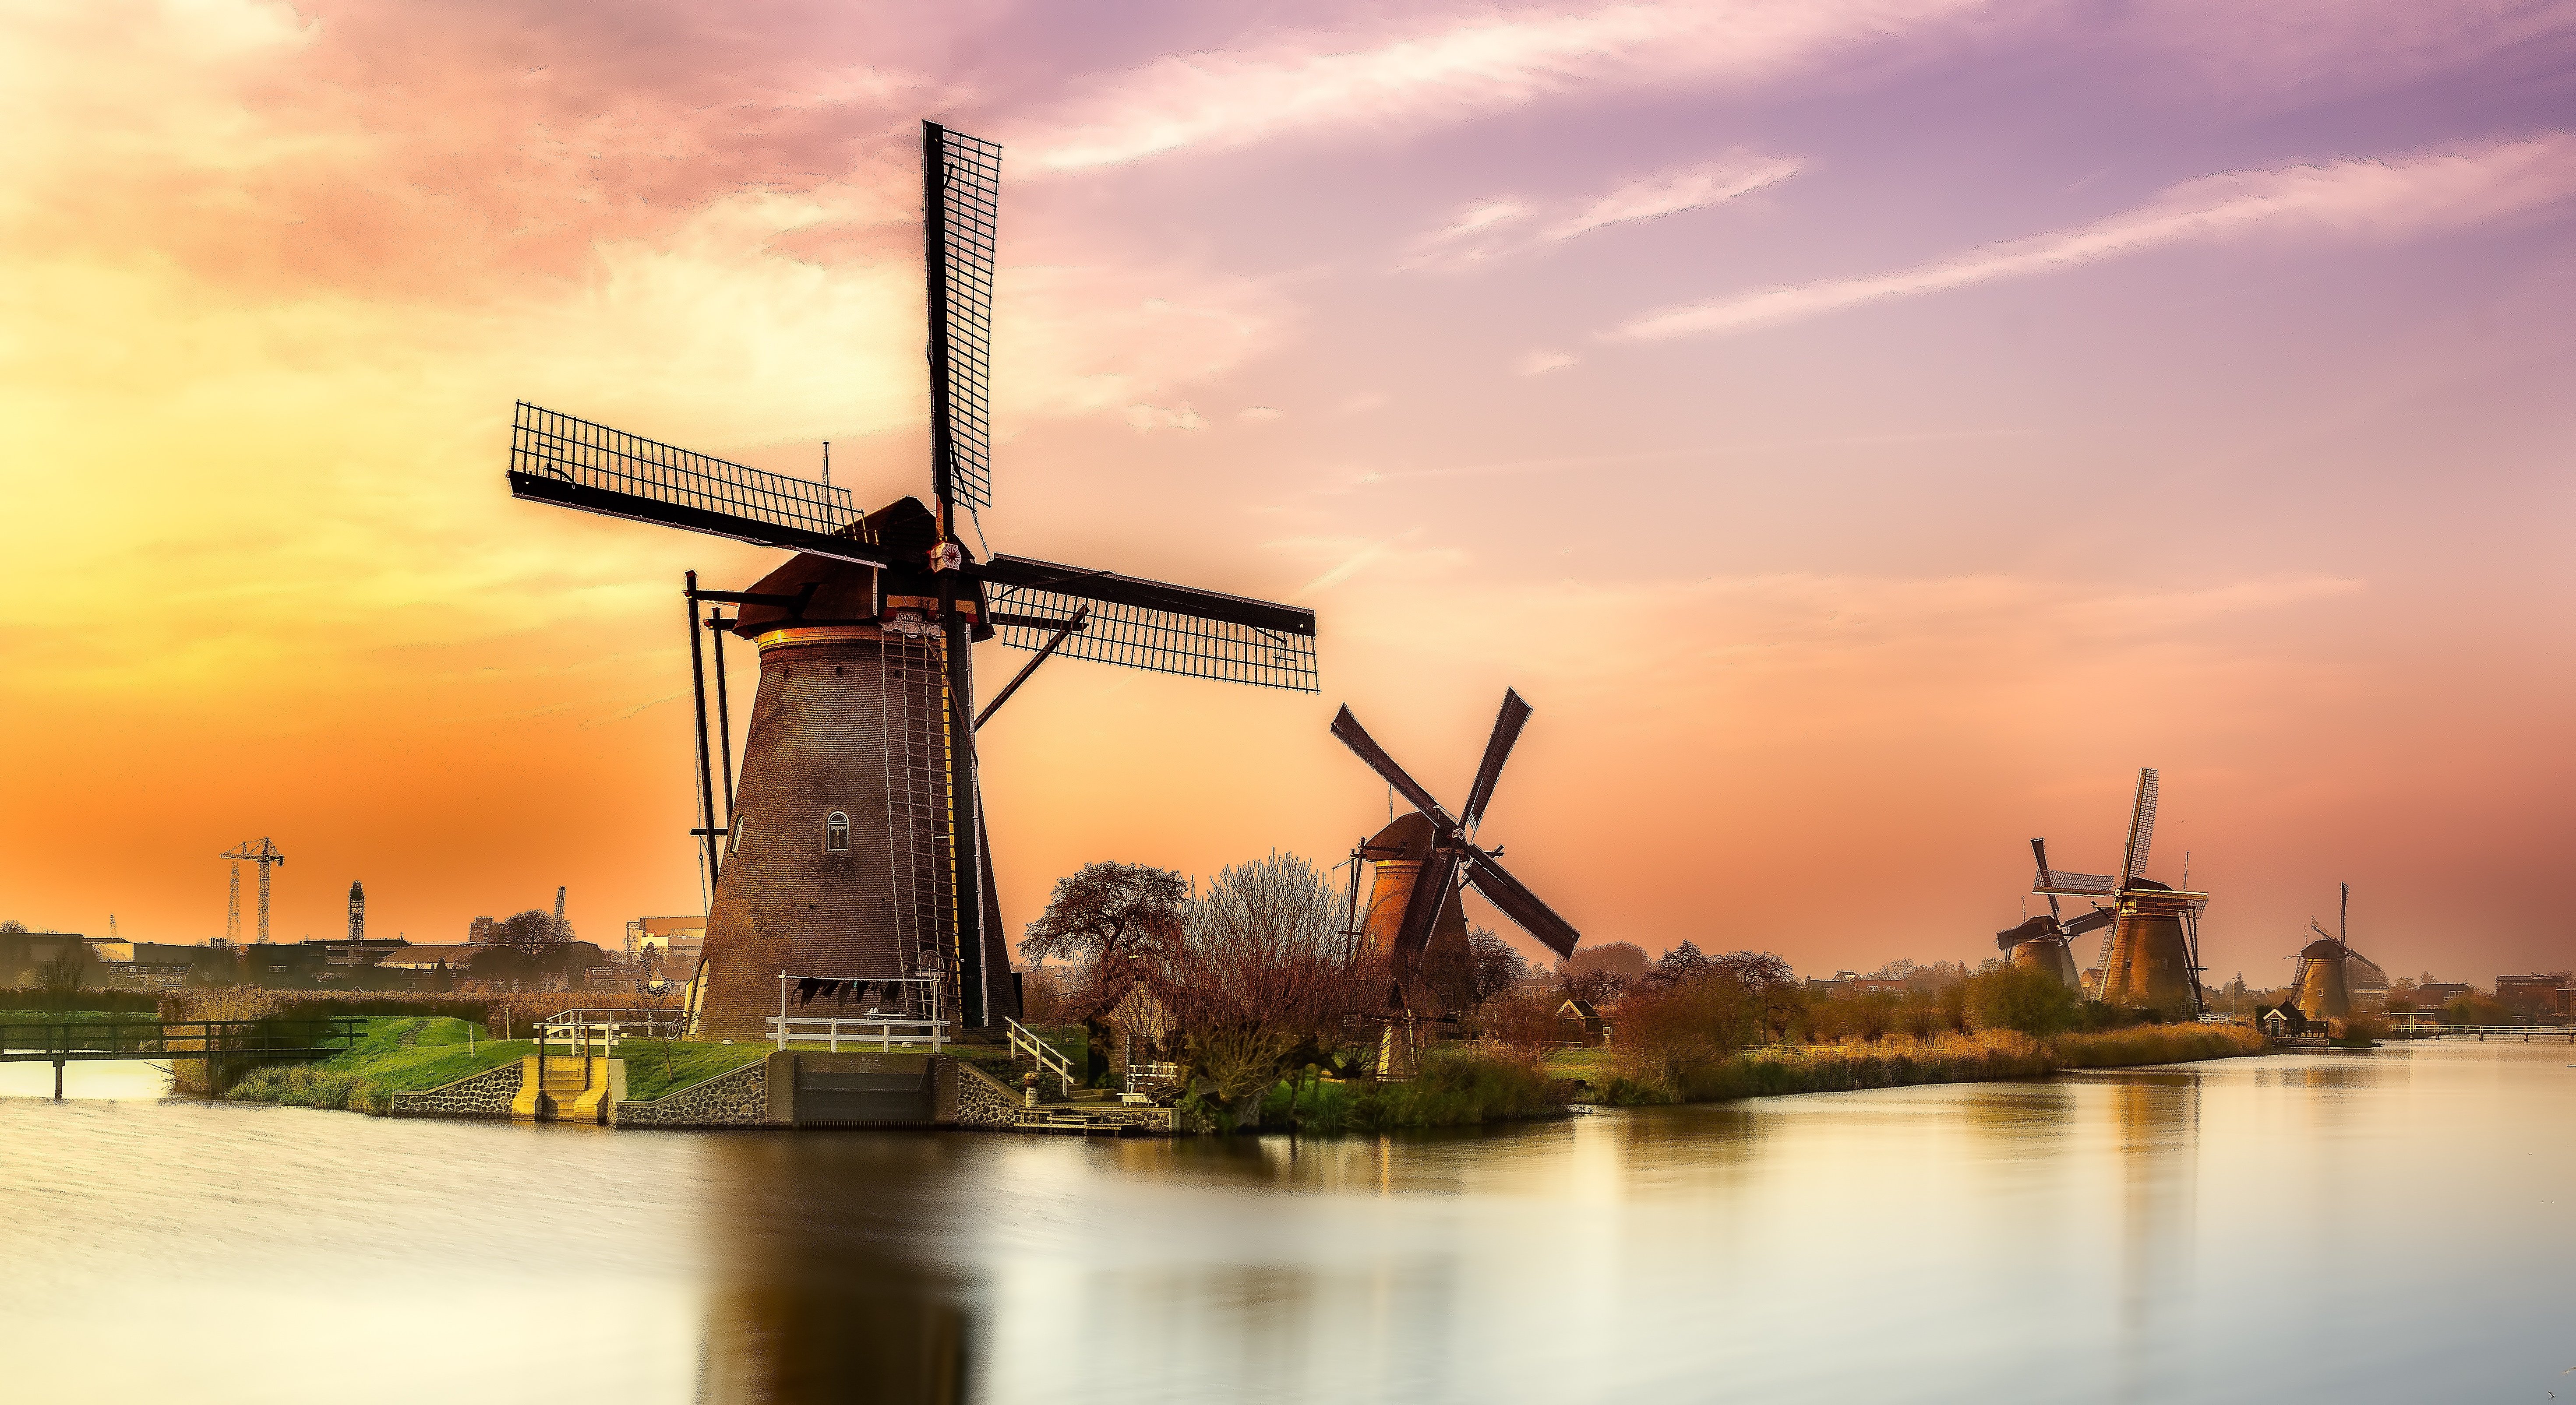 Sunset River Holland Windmill Landscape Reflection